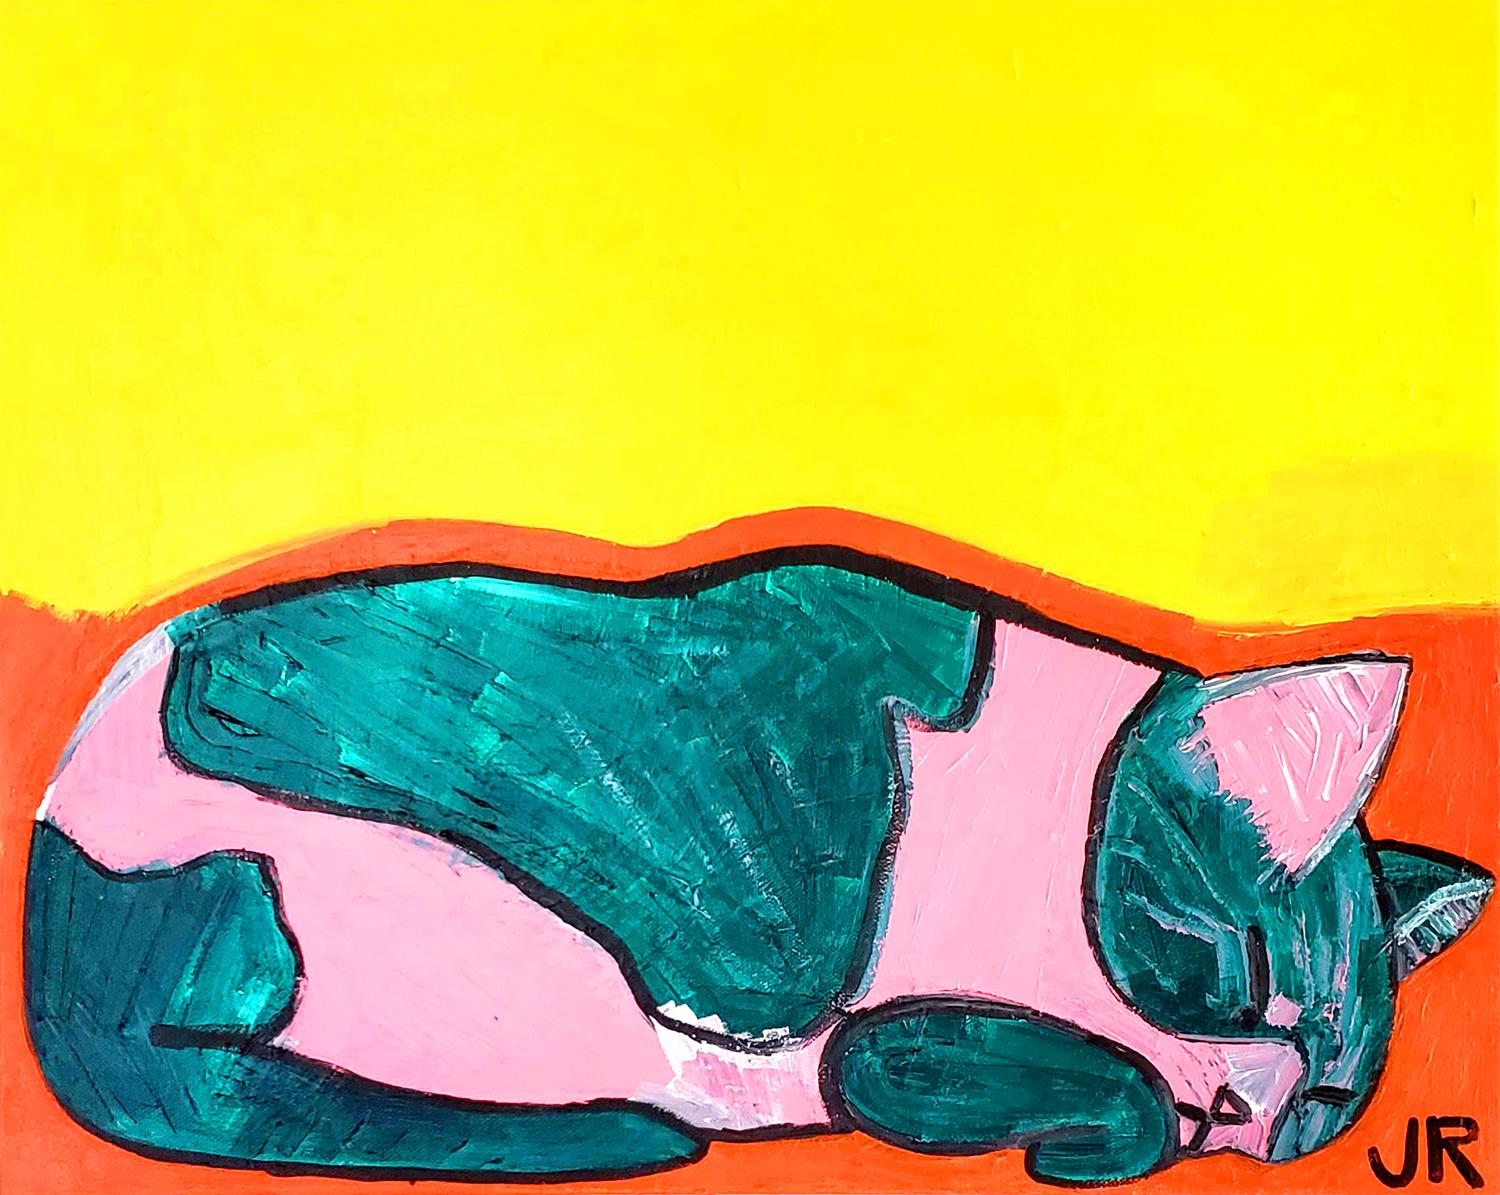 Jessica JH Roller Animal Painting - Sleeping Cat on Orange and Yellow, Original Painting